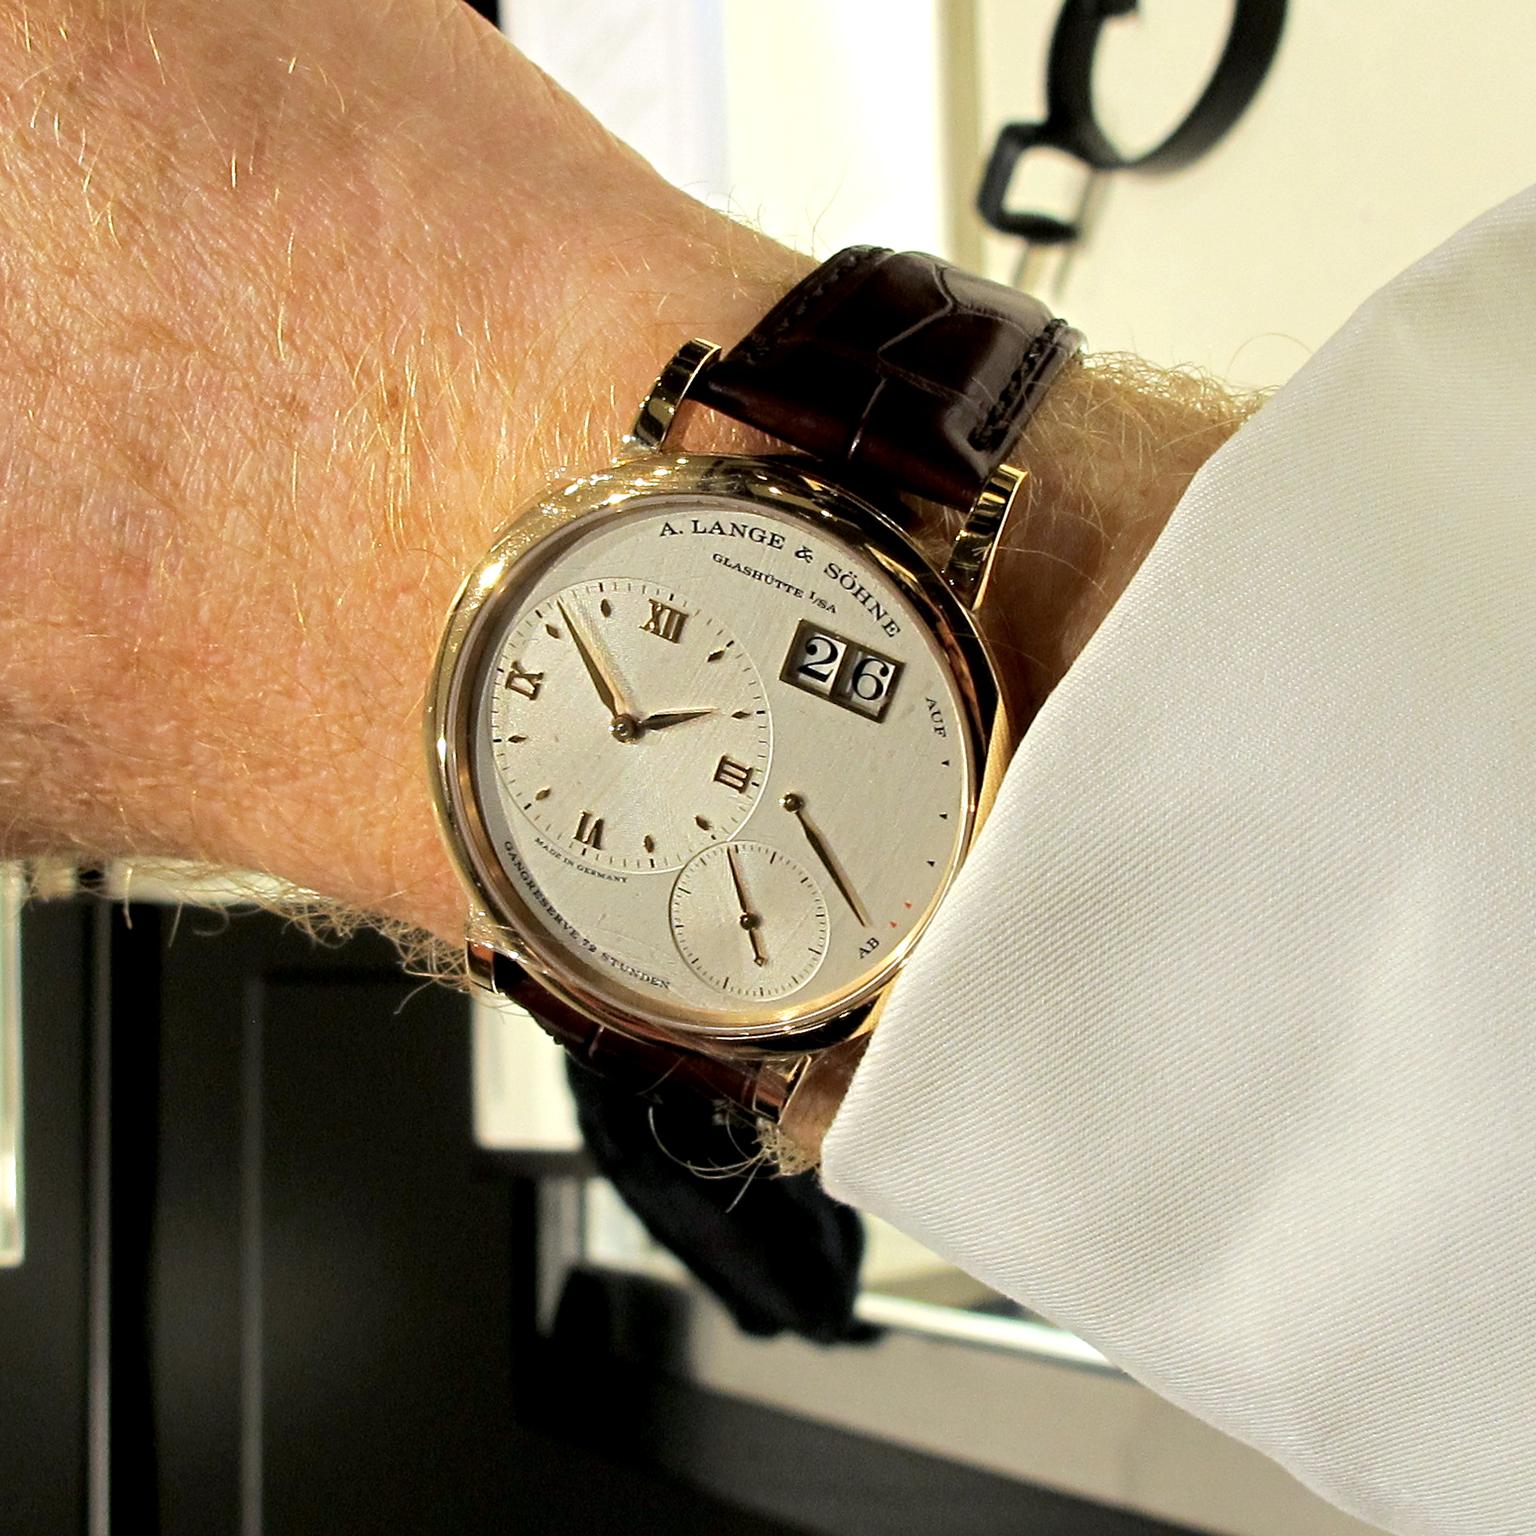 A. Lange & Söhne Grand Lange 1 watch in rose gold